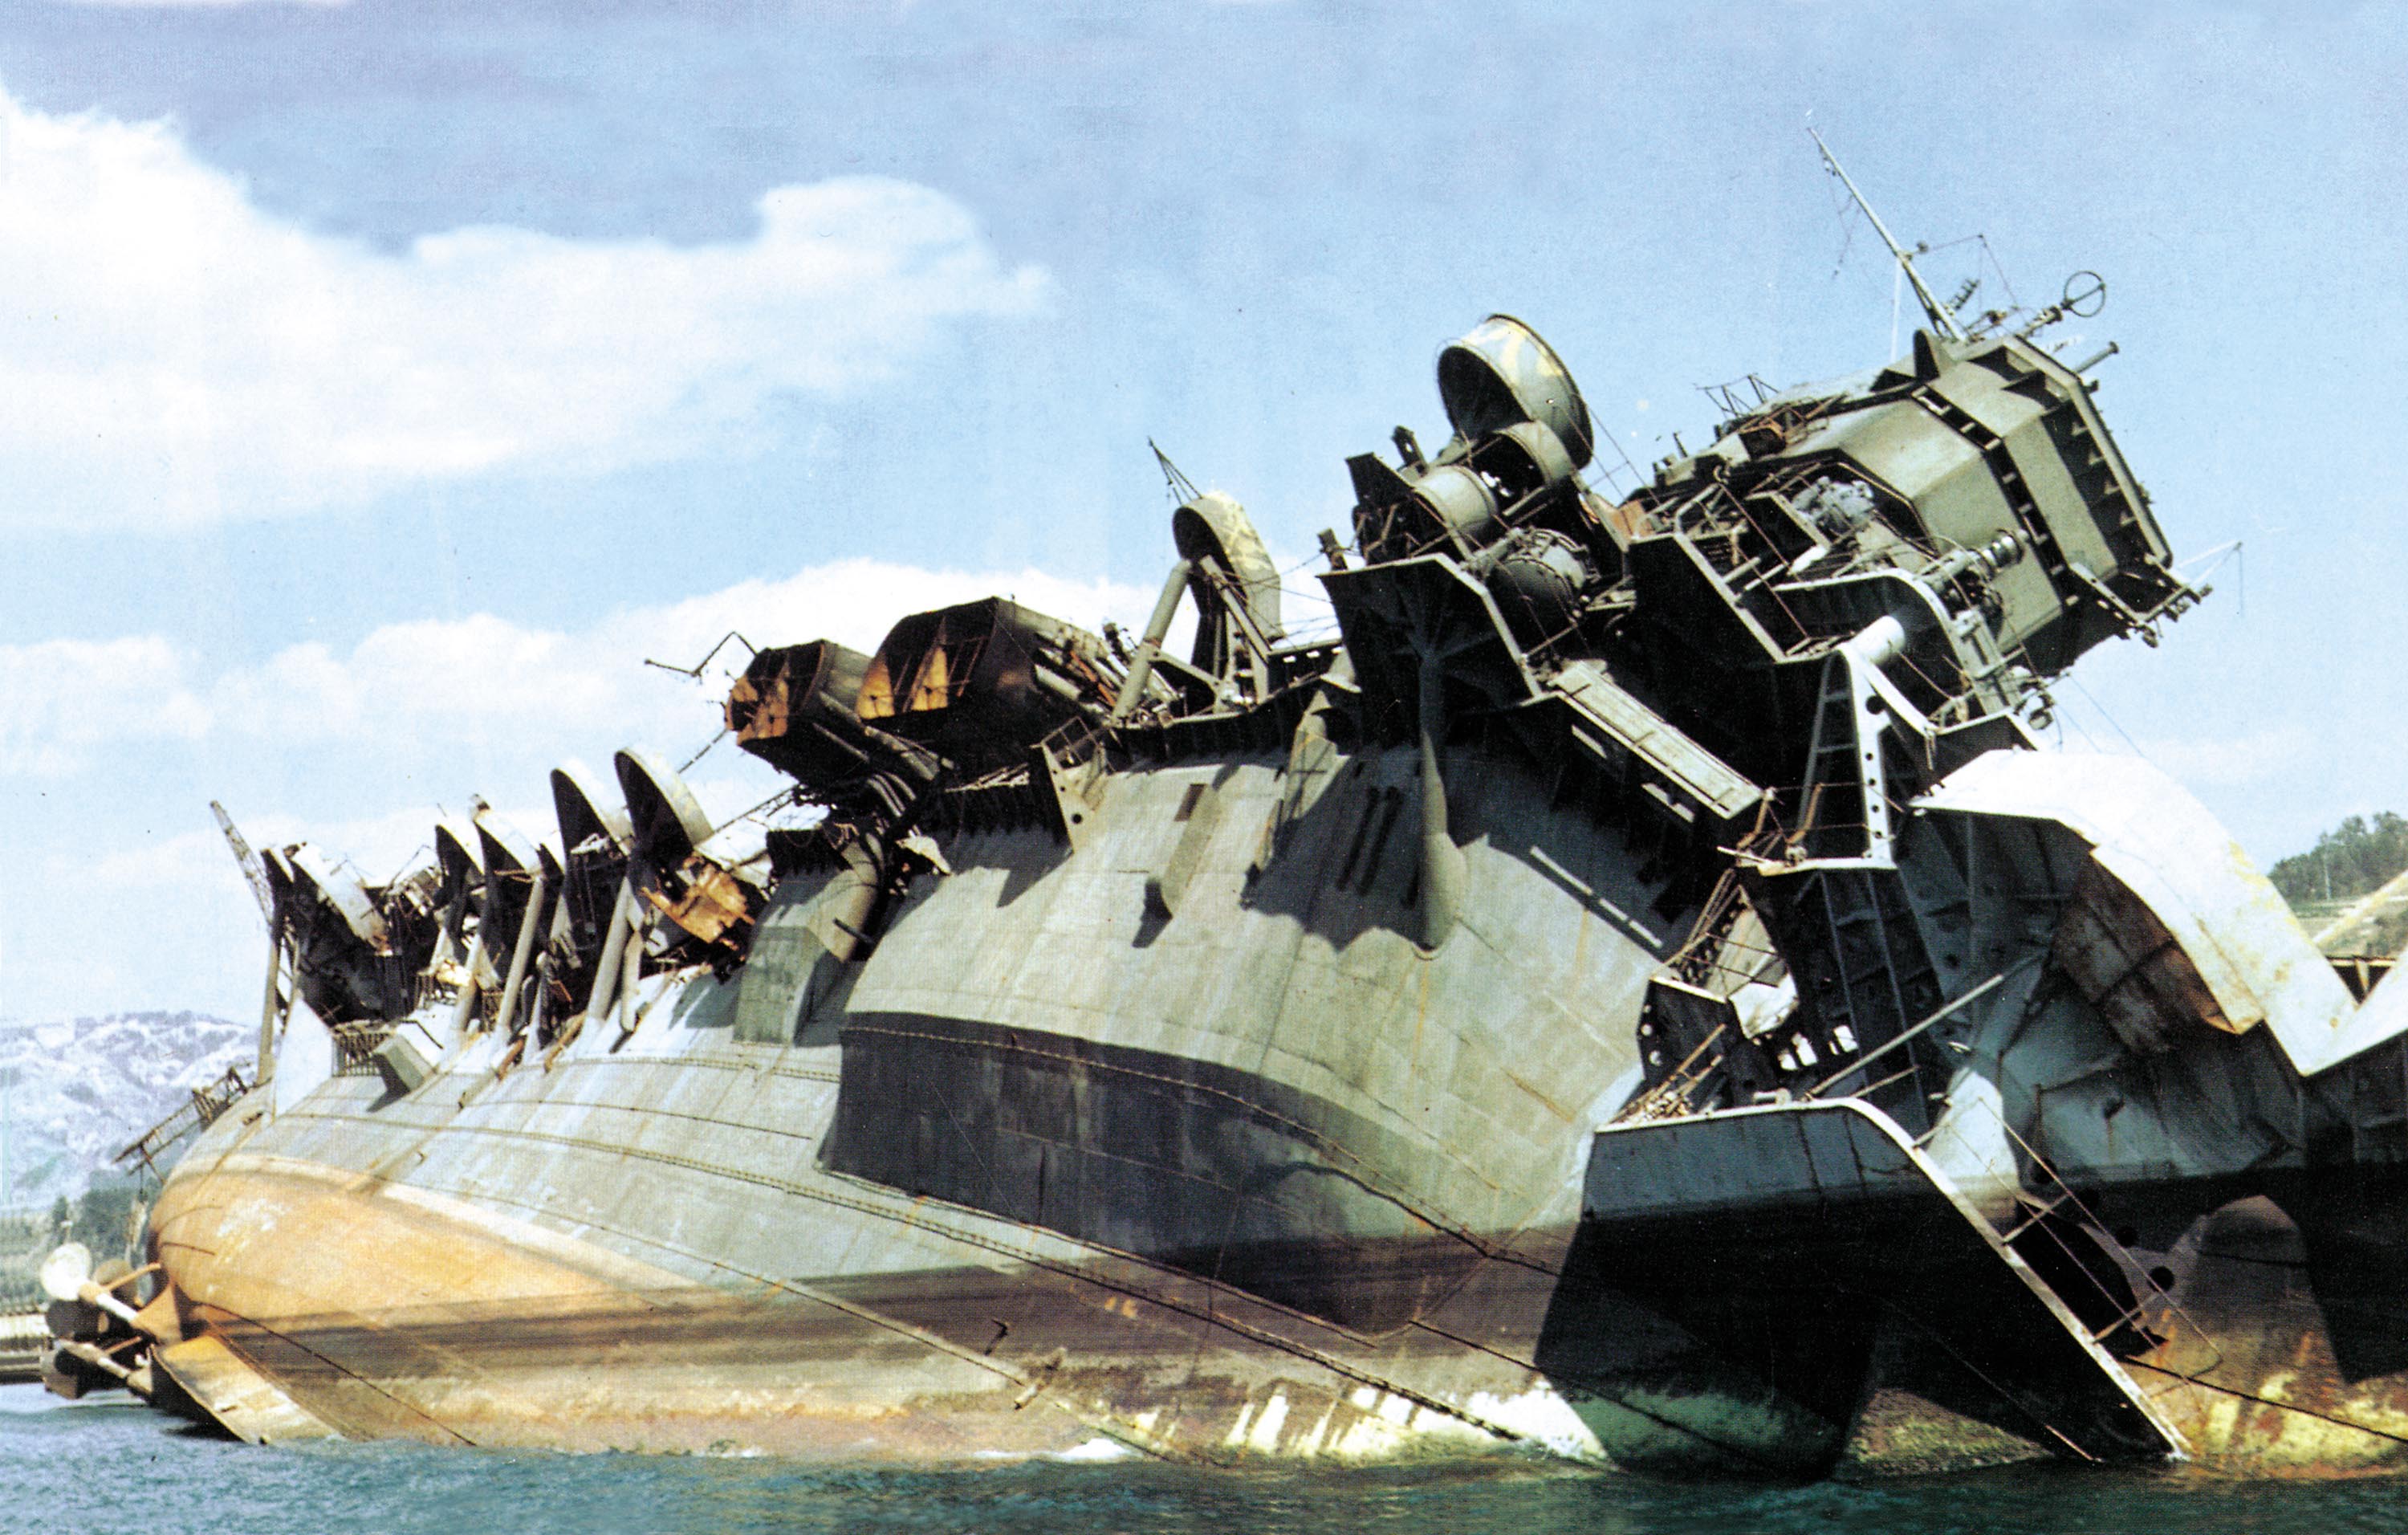 IJN_carrier_Amagi_capsized_off_Kure_in_1946.jpg